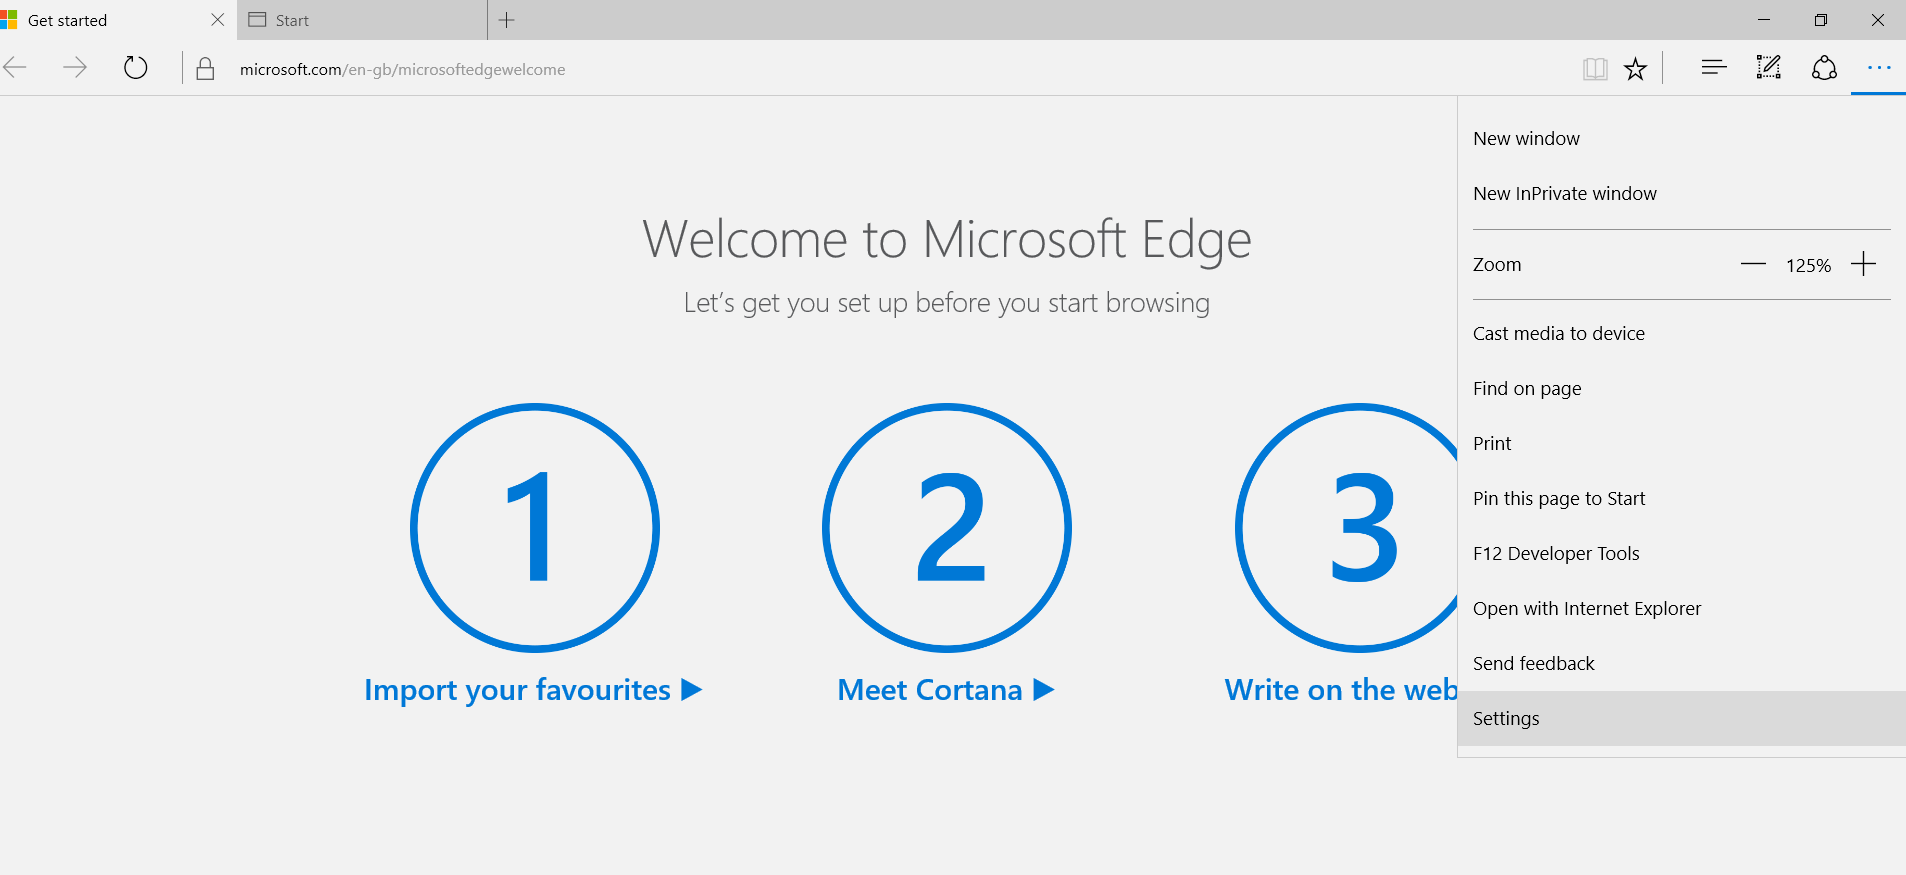 Windows 10 Security Guide - Microsoft Edge Settings